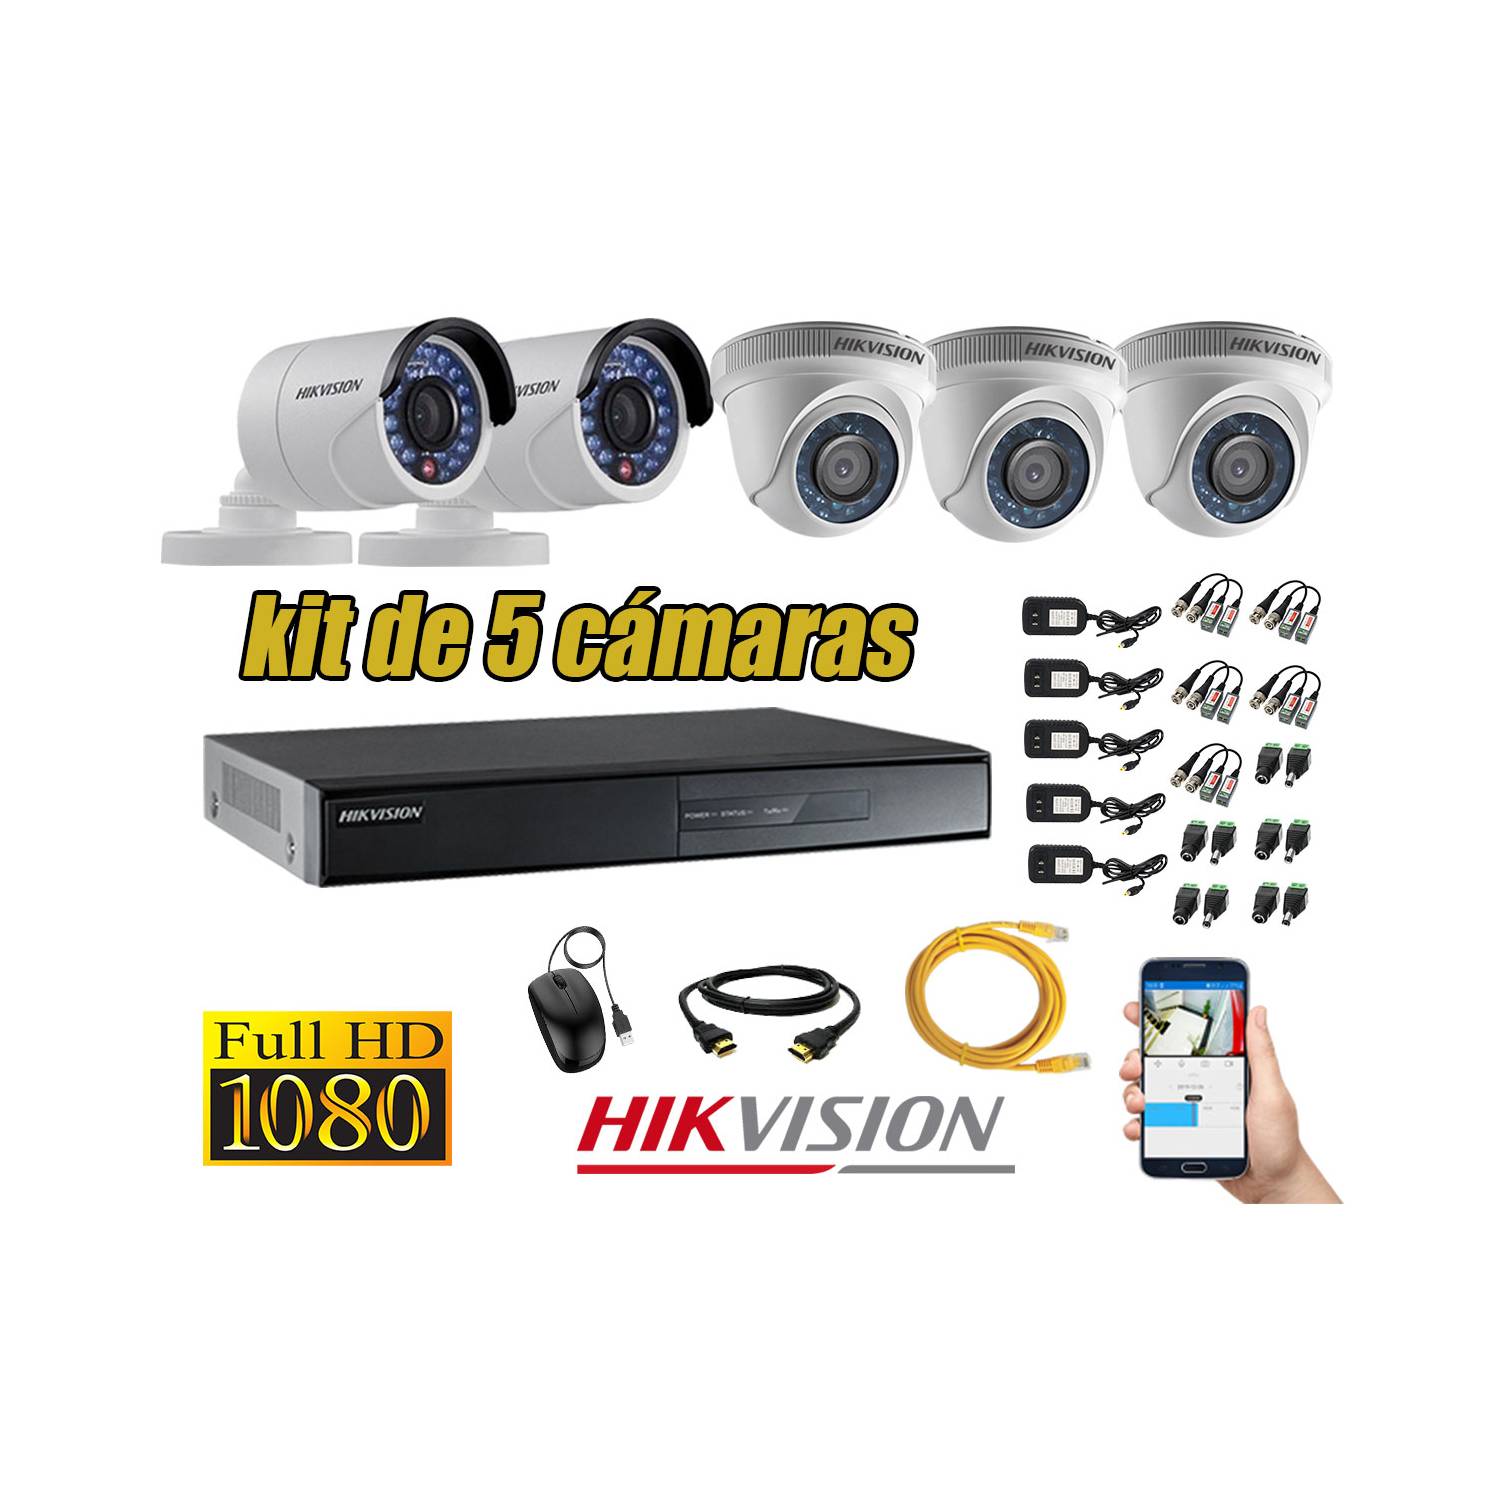 5 Cámaras de Seguridad Full HD 1080p P2P Vigilancia + Kit de Herramientas Gratis |